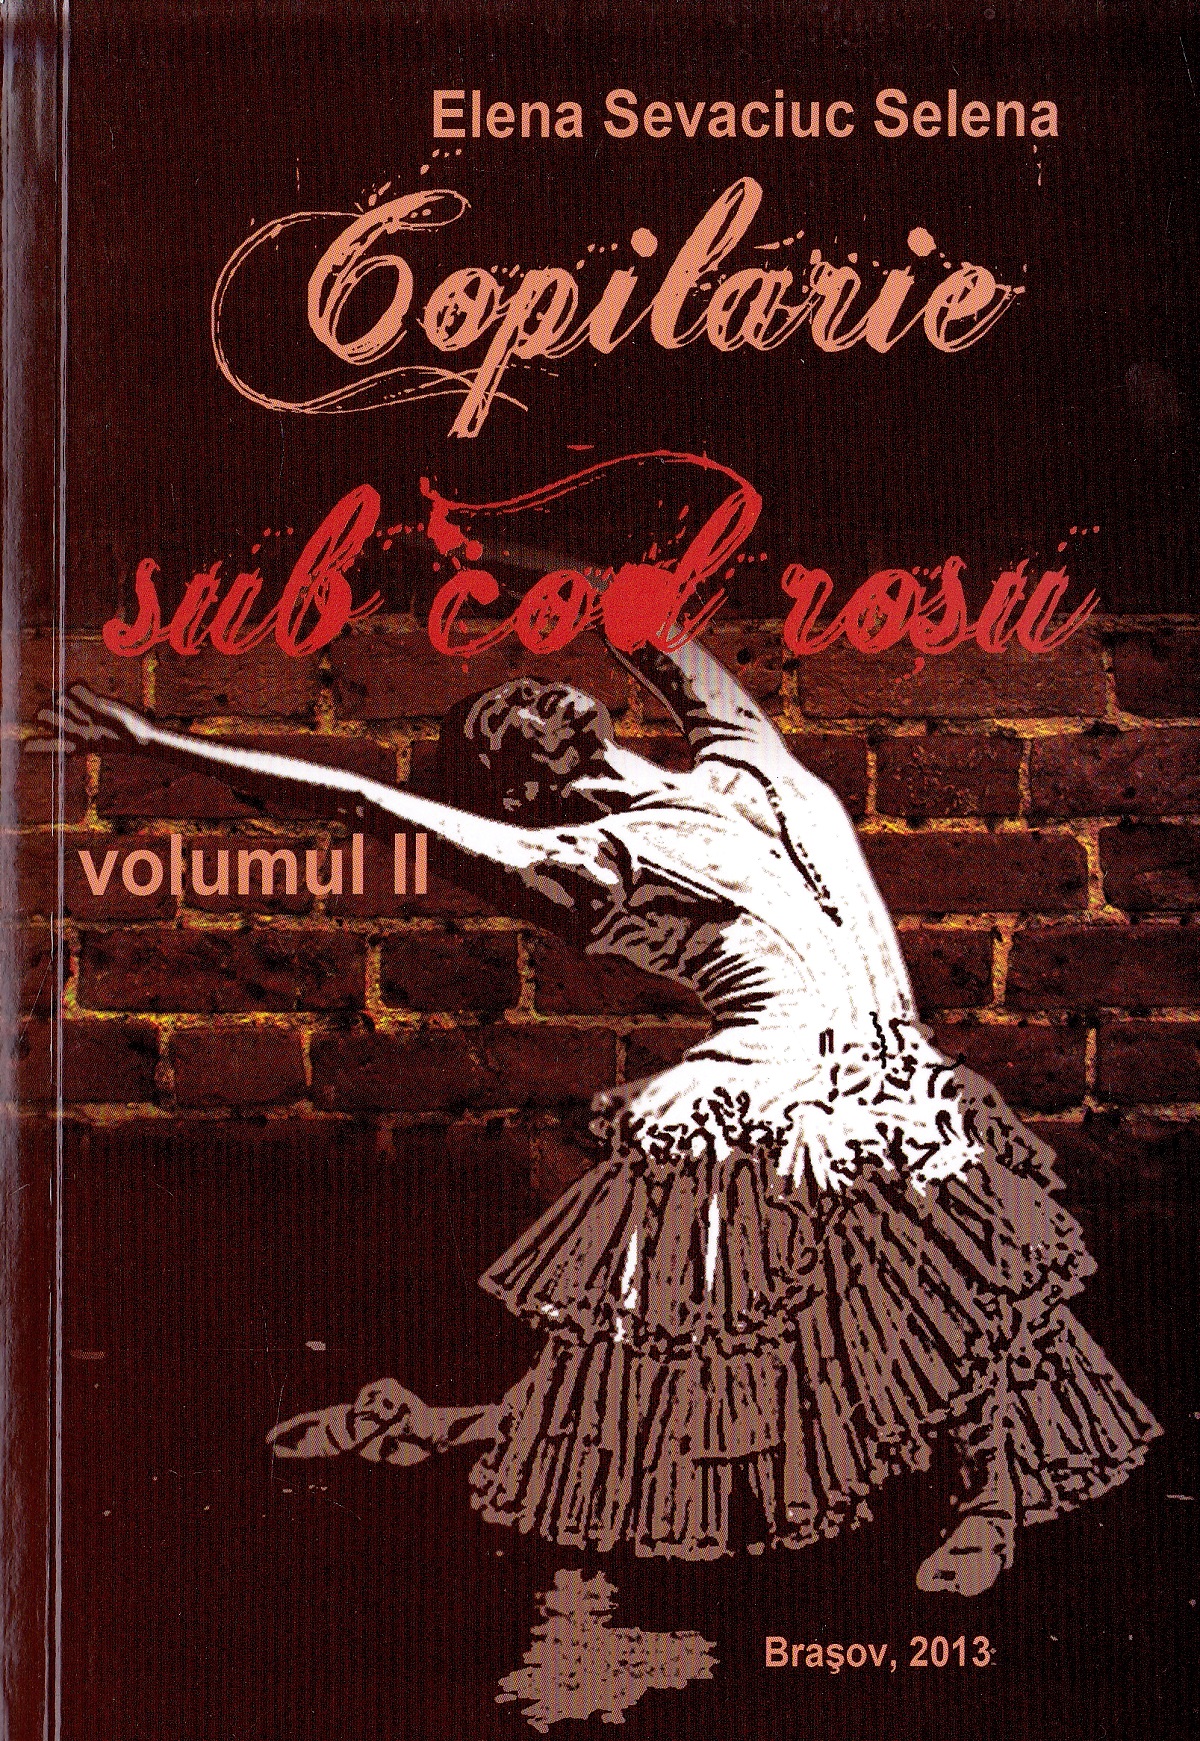 Copilarie sub cod rosu vol.1+2 - Elena Sevaciuc Selena